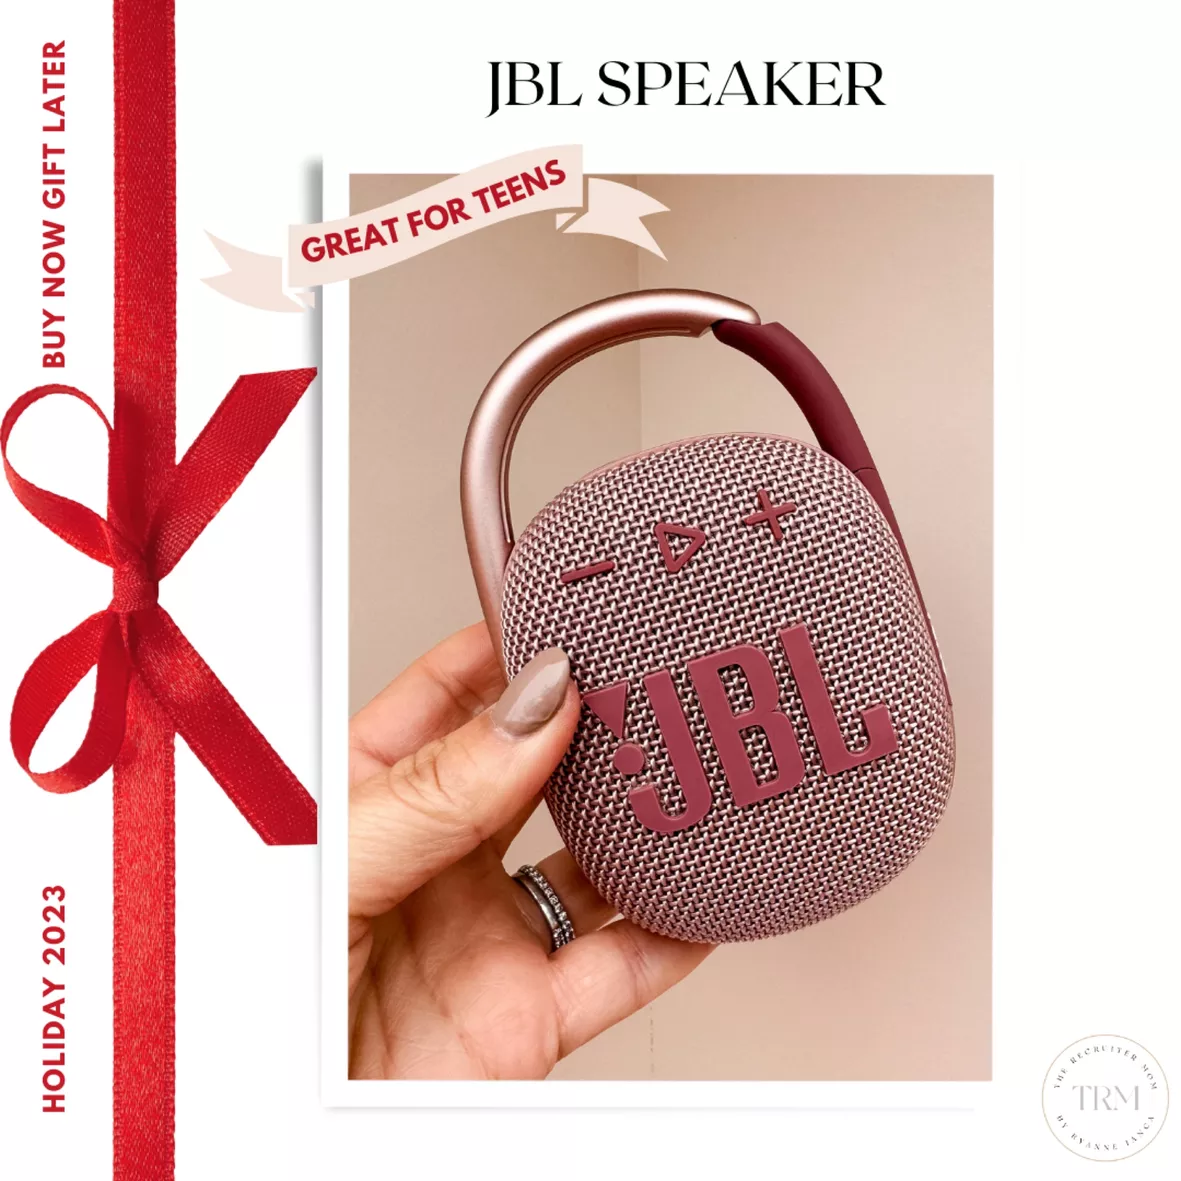 JBL Clip 4 ultra portable bluetooth speaker